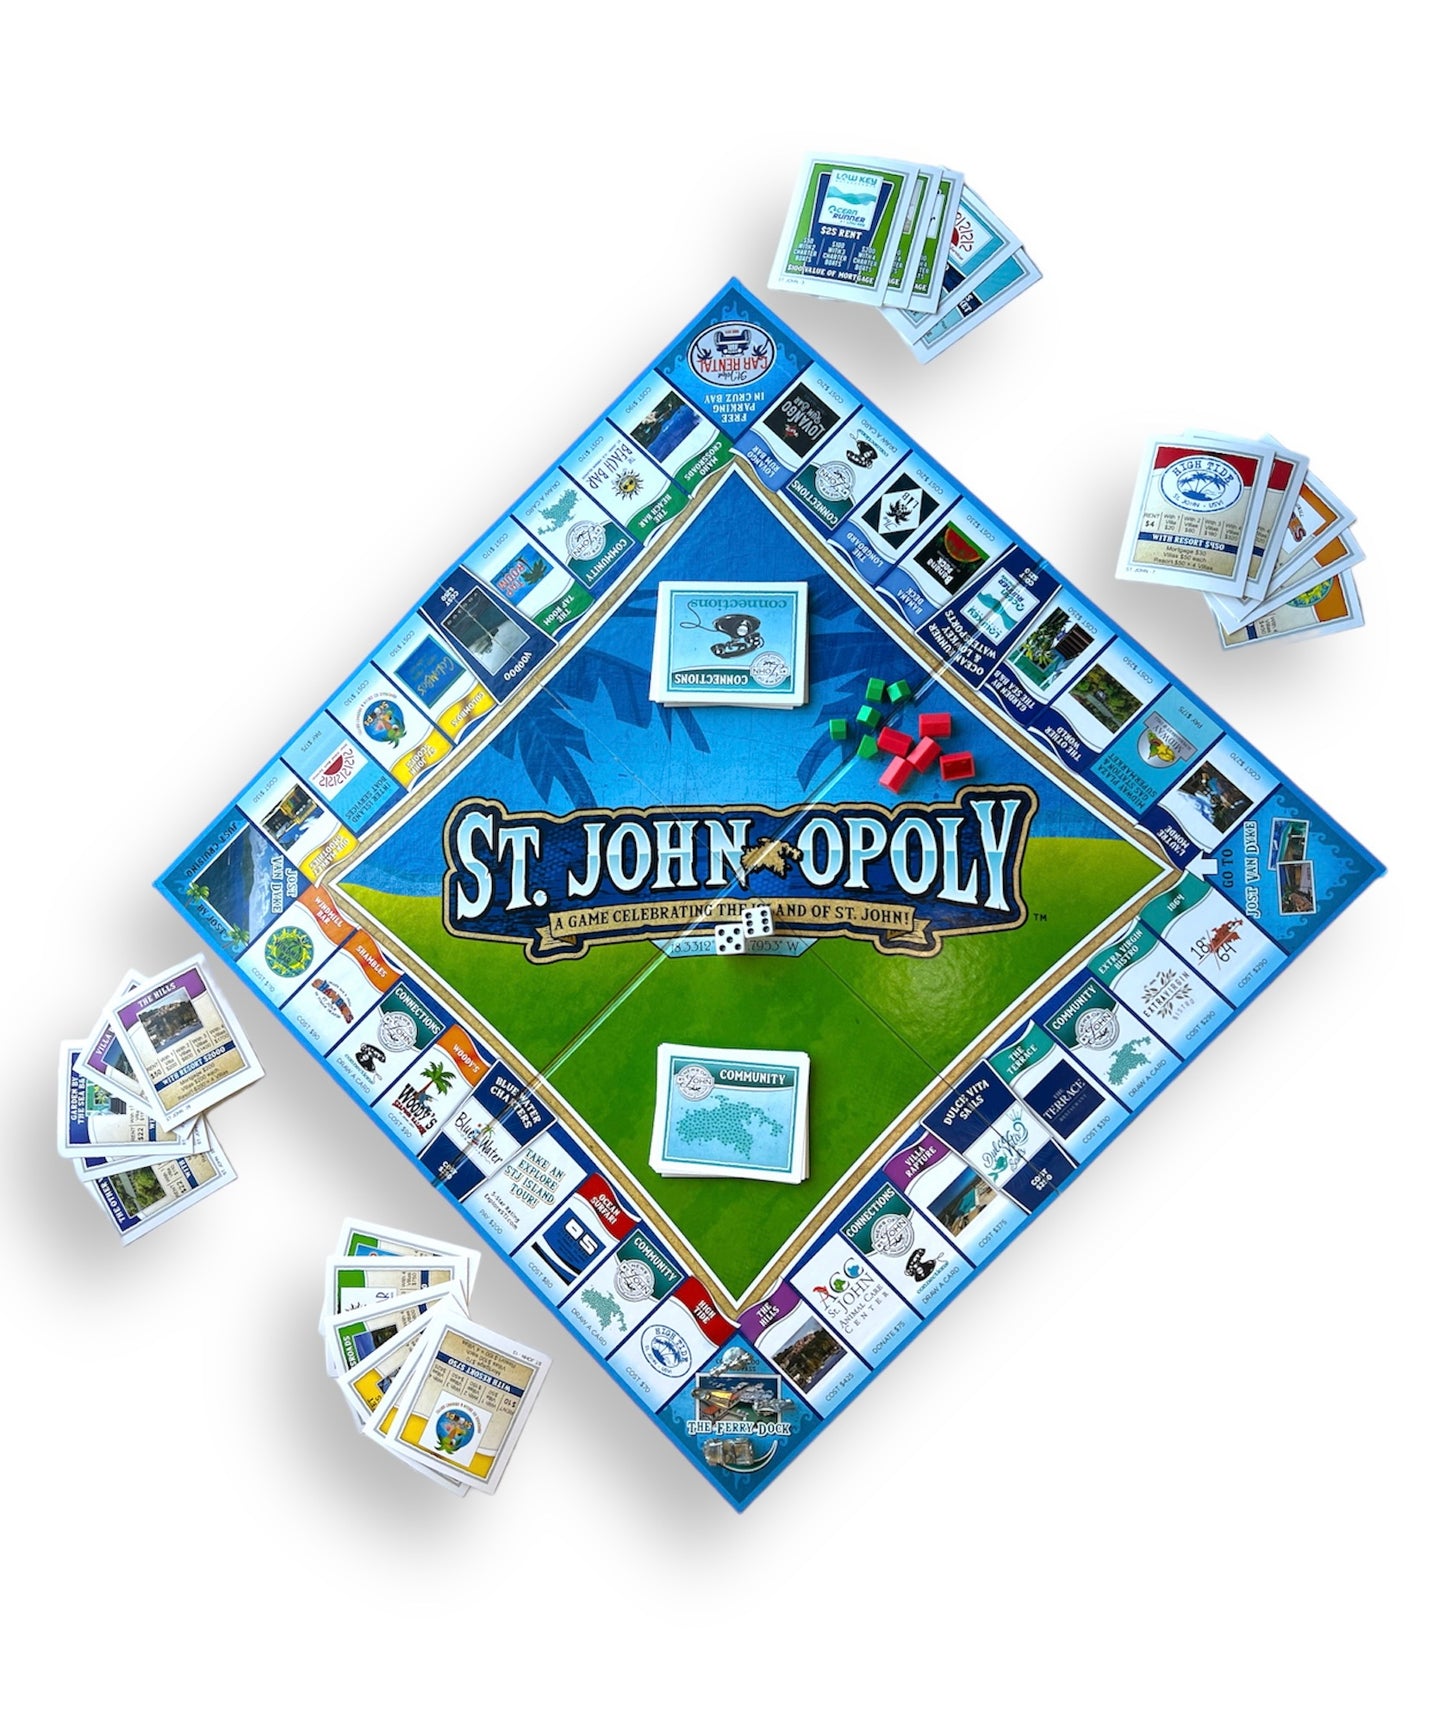 St. Johnopoly – 4th Edition!